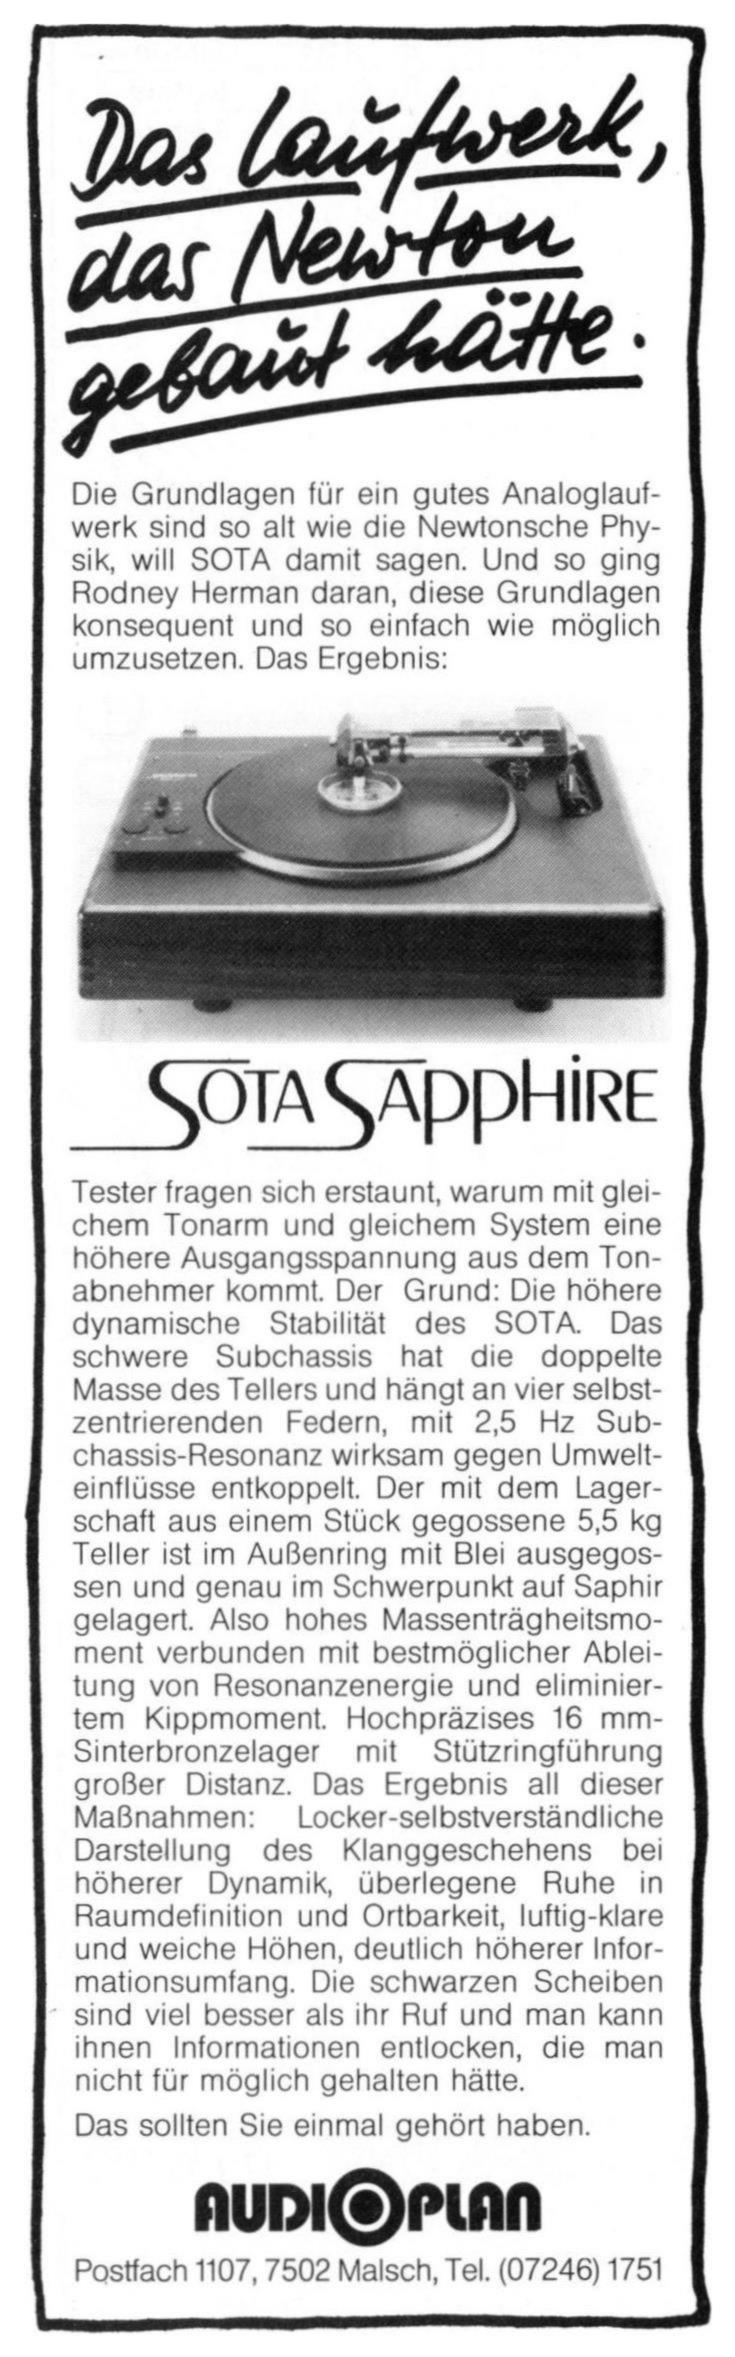 Audioplan 1984 01.jpg